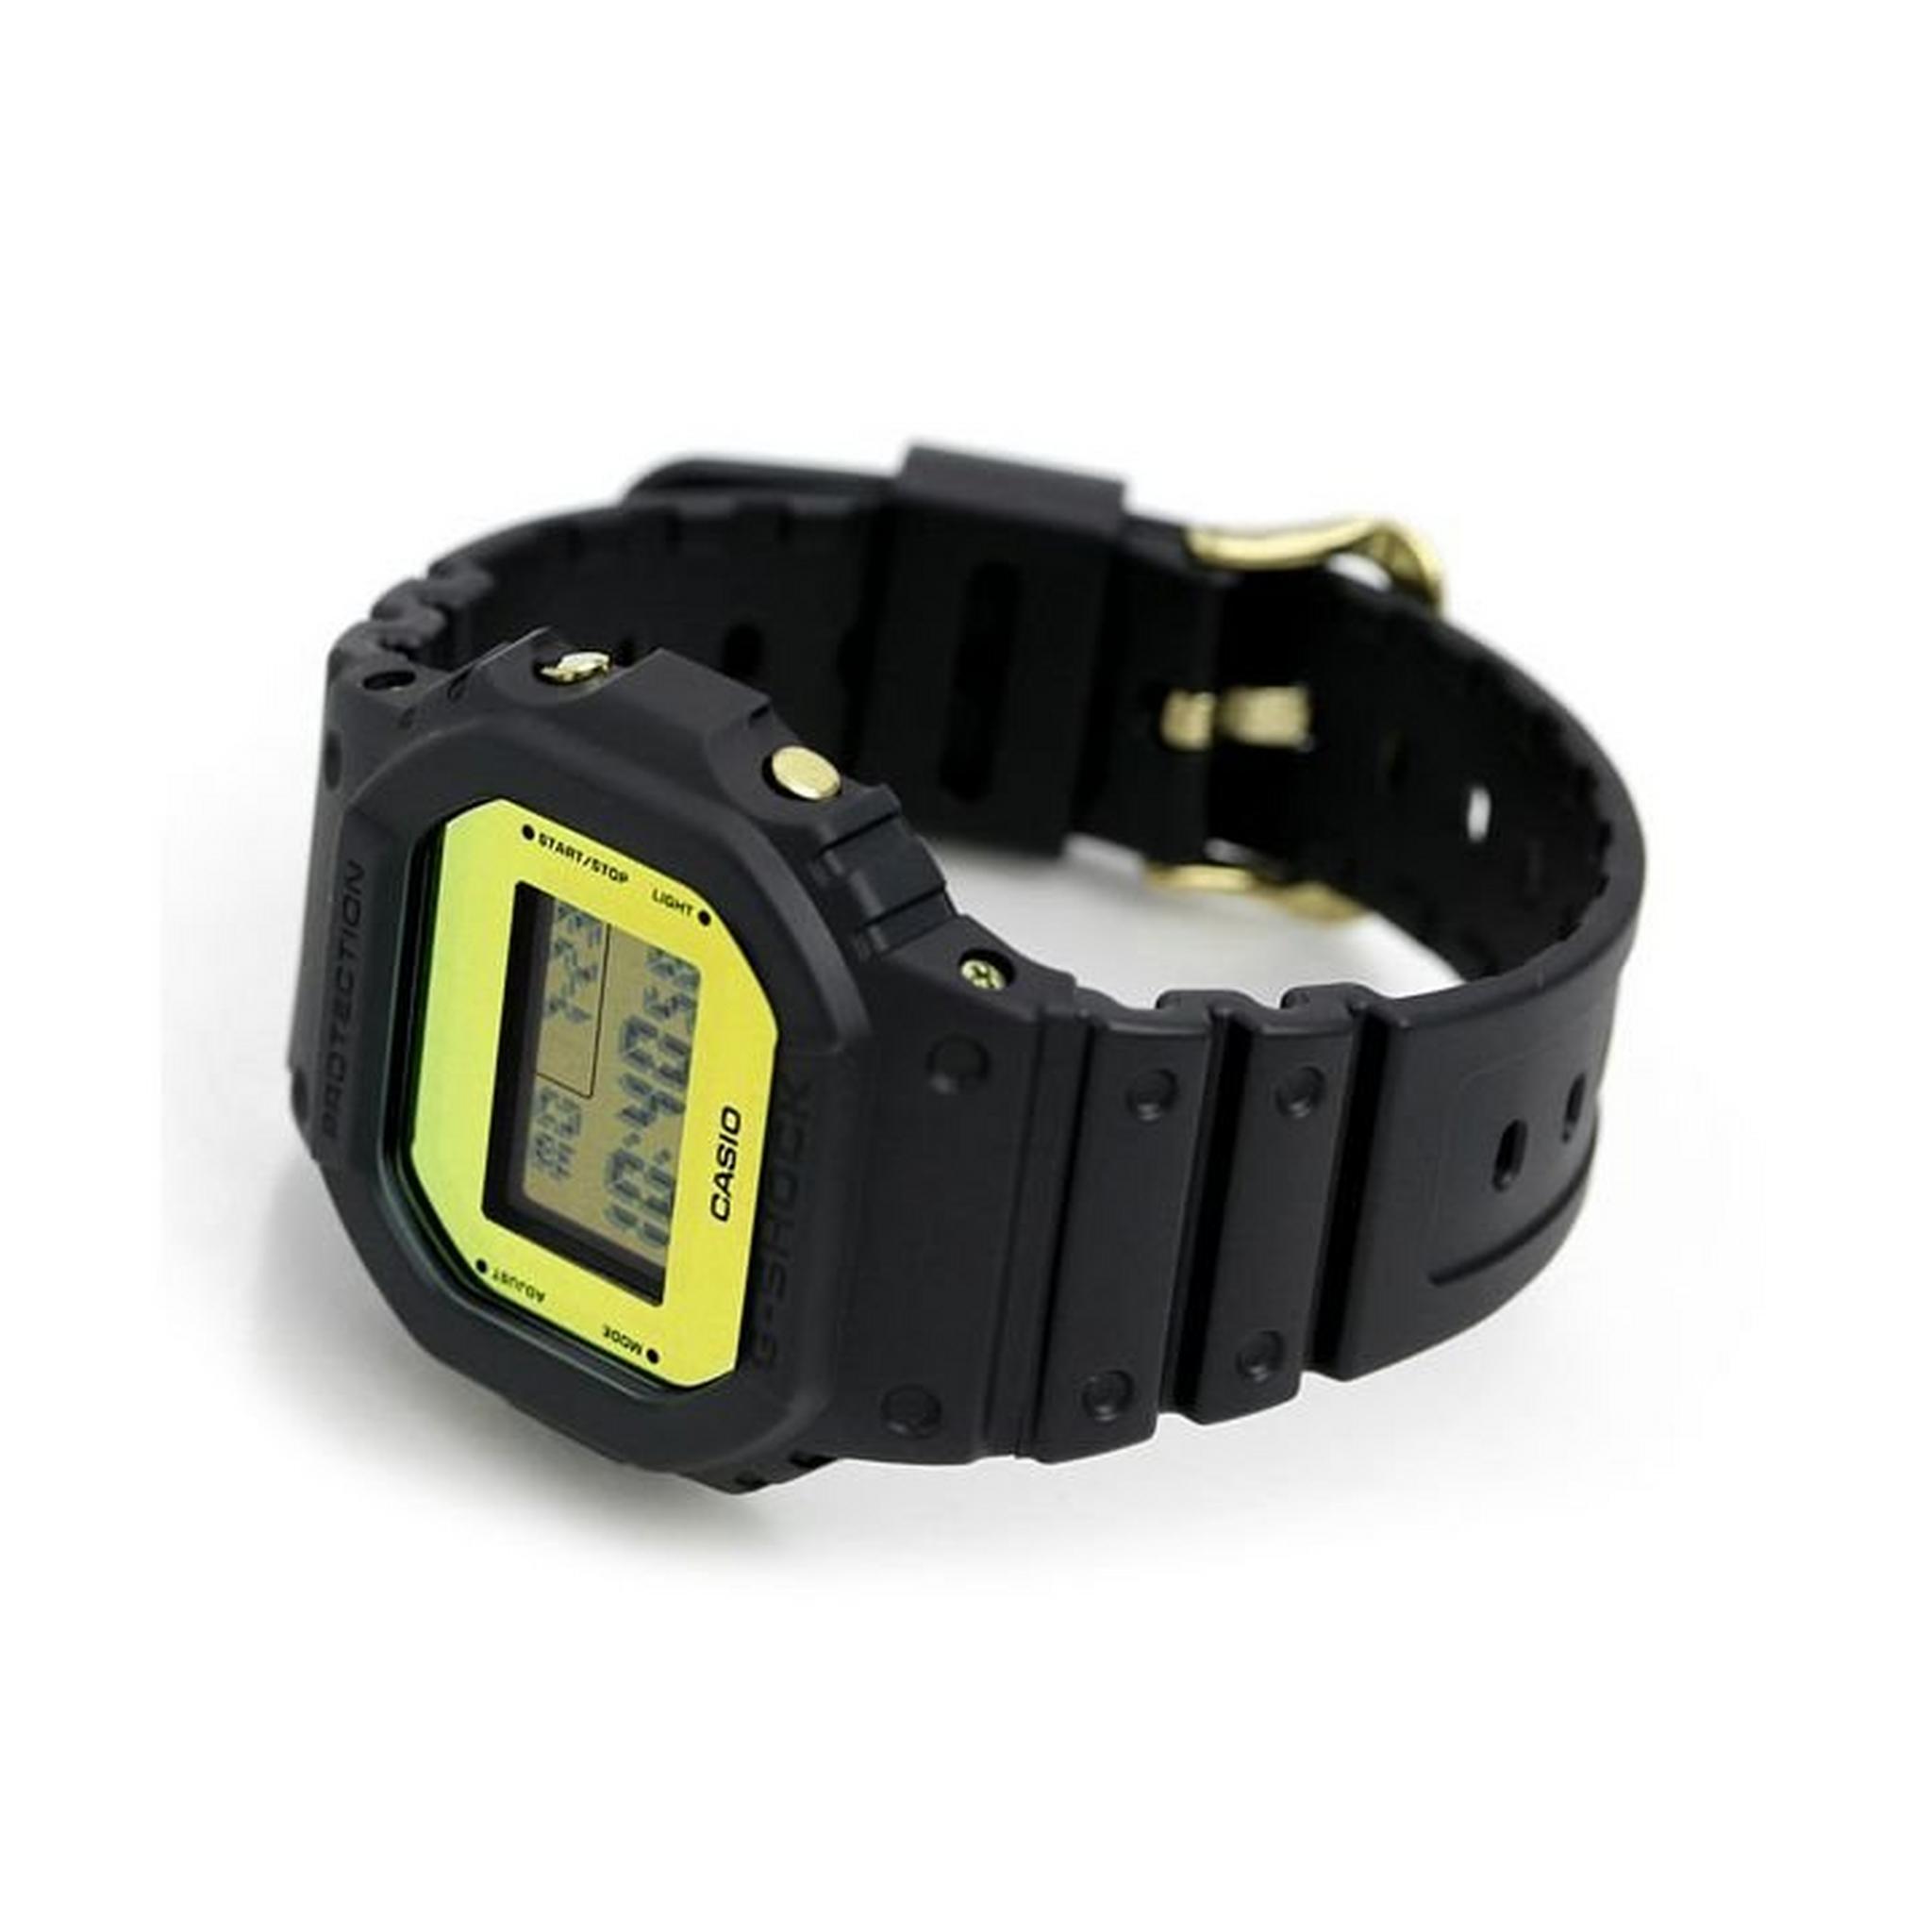 Casio G-shock Digital Gents Rubber Watch (DW-5600BBMB-1DR)